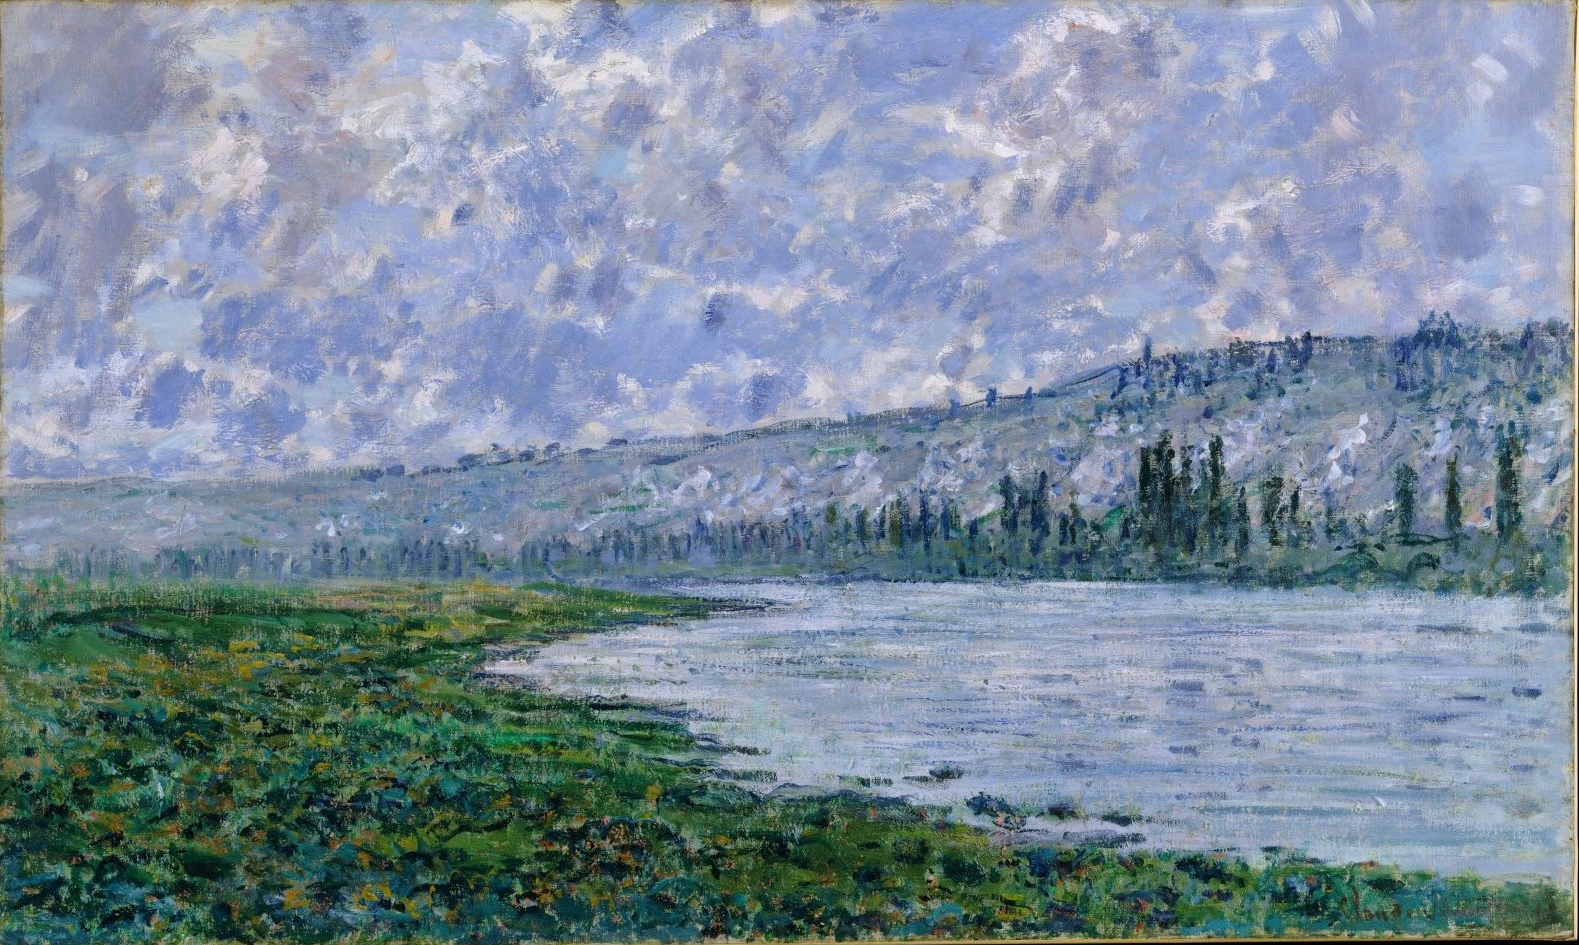 Claude+Monet-1840-1926 (819).jpg